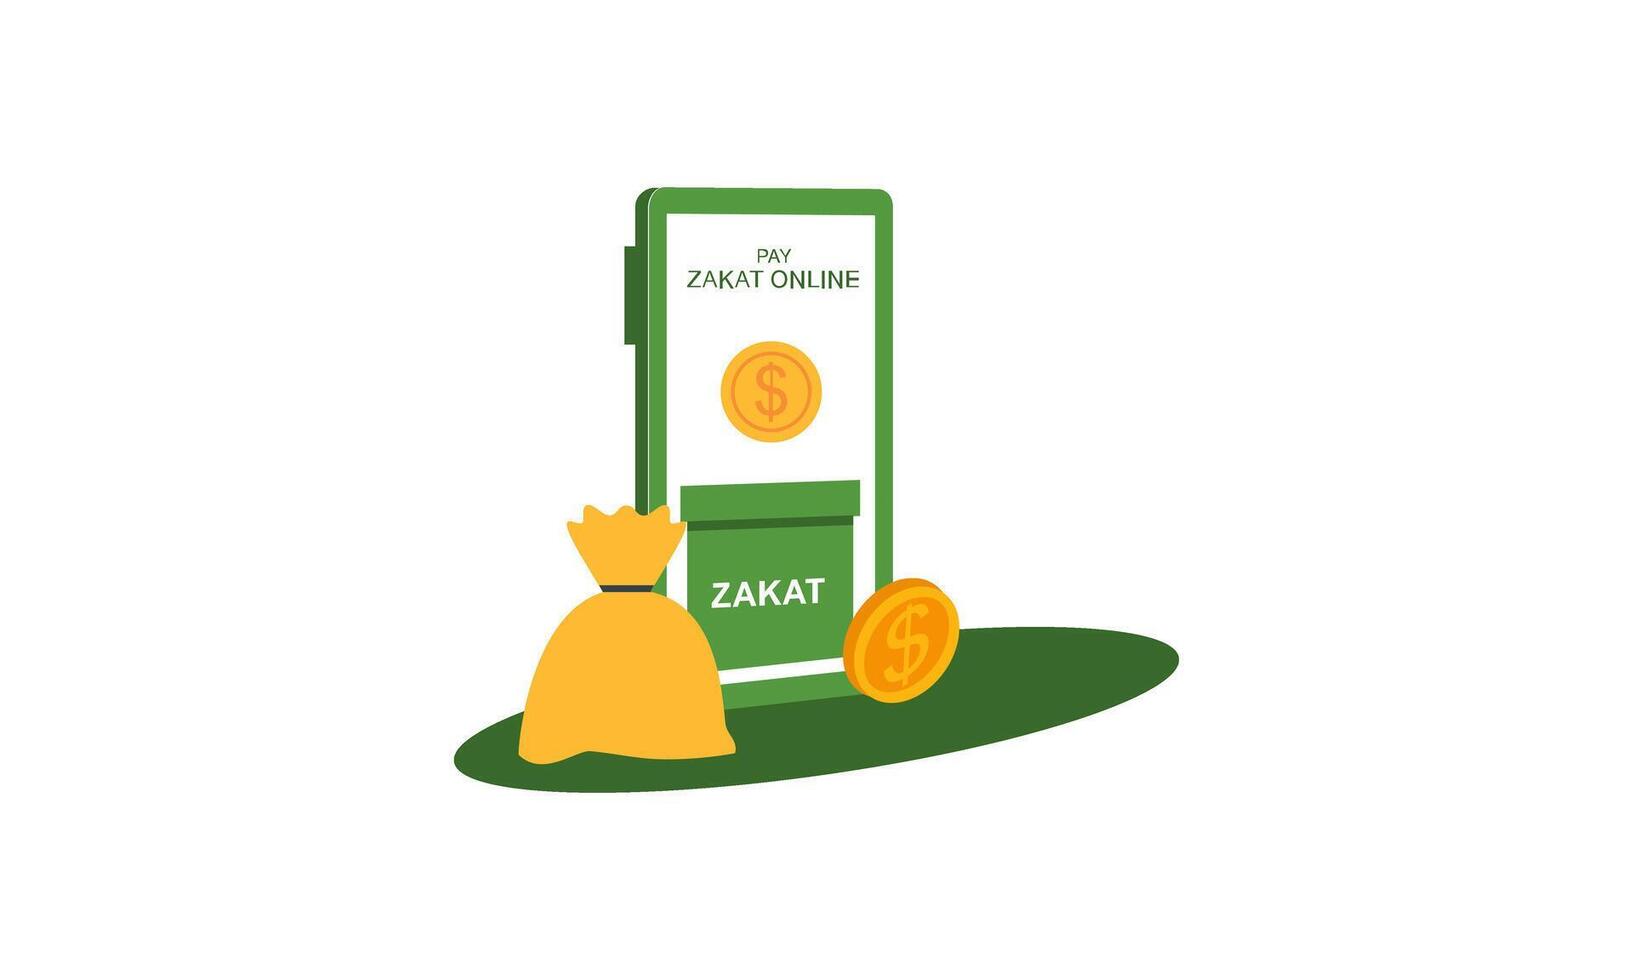 pagar zakat ou conectados zakat inscrição para islâmico Ramadã conceito vetor